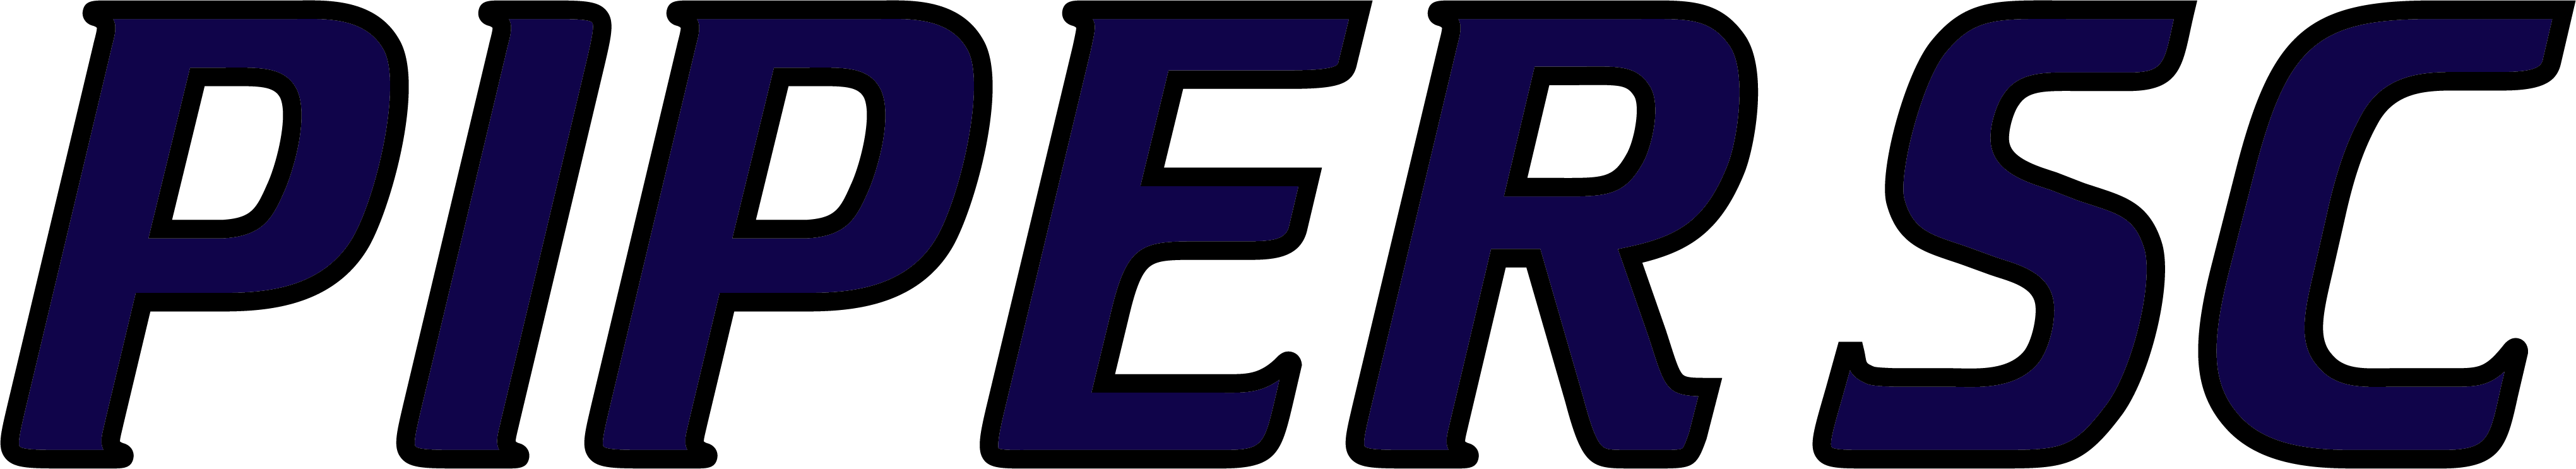 pipersc header logo2